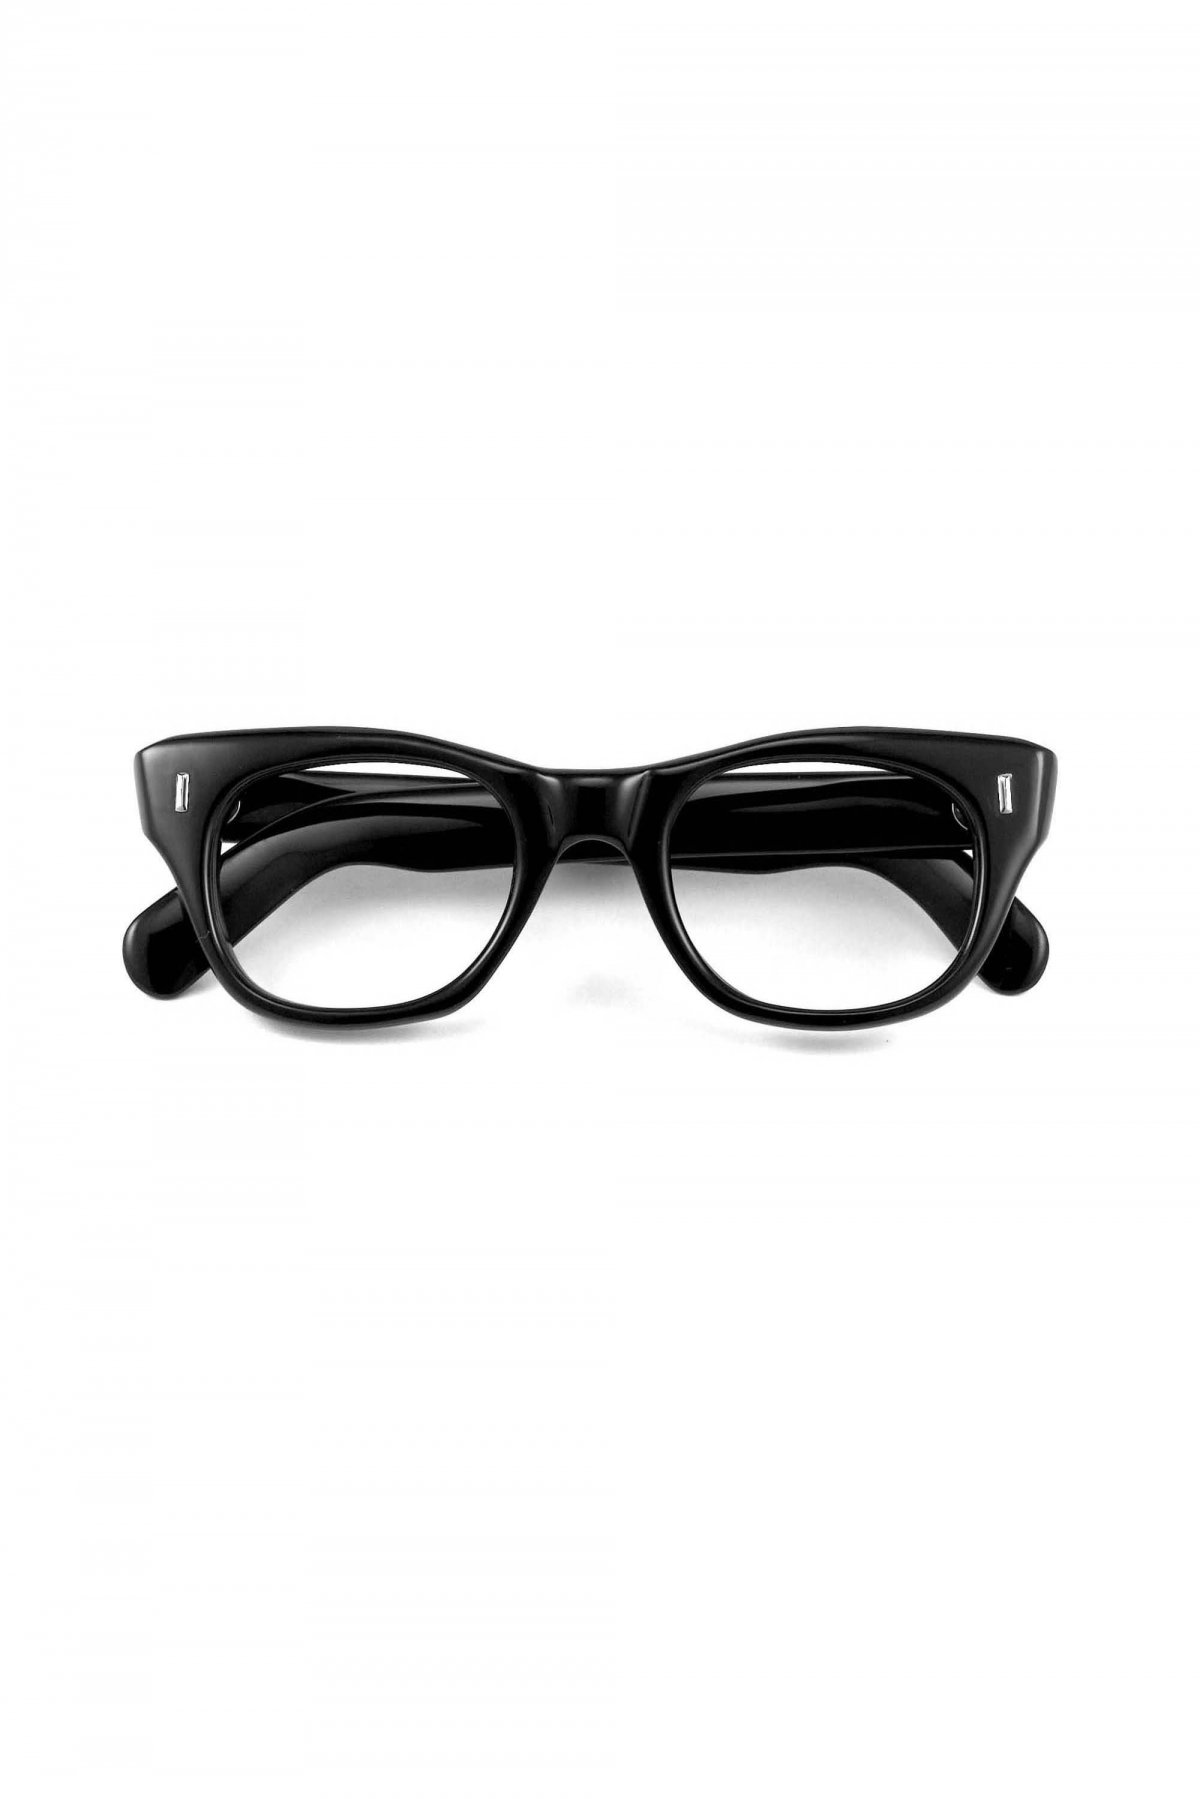 1960s FRANCE VINTAGE EYEGLASS BLACK - OPT-751 ビンテージ眼鏡 